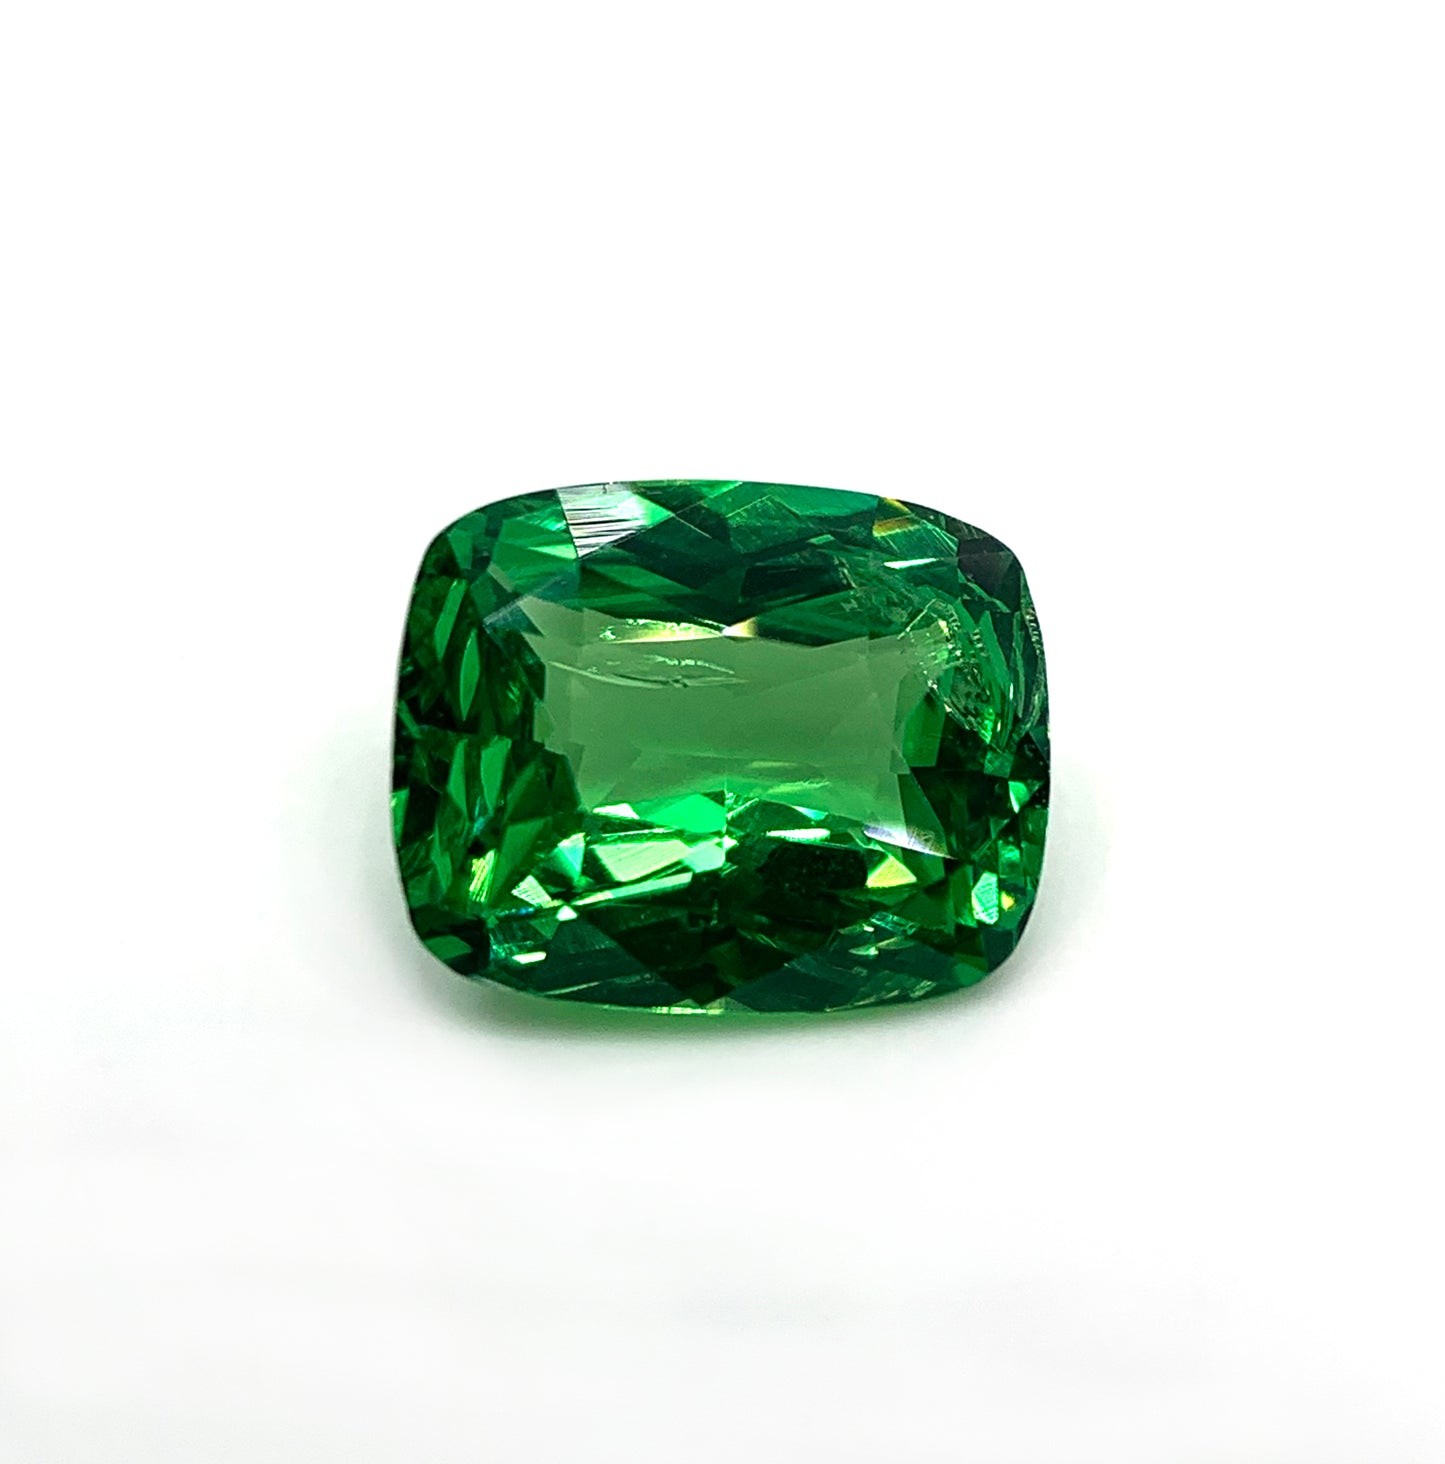 Vivid Green Natural Tsavorire 2.02 crt. for engagement rings, Jewelry, custom jewelry, loose gemstone